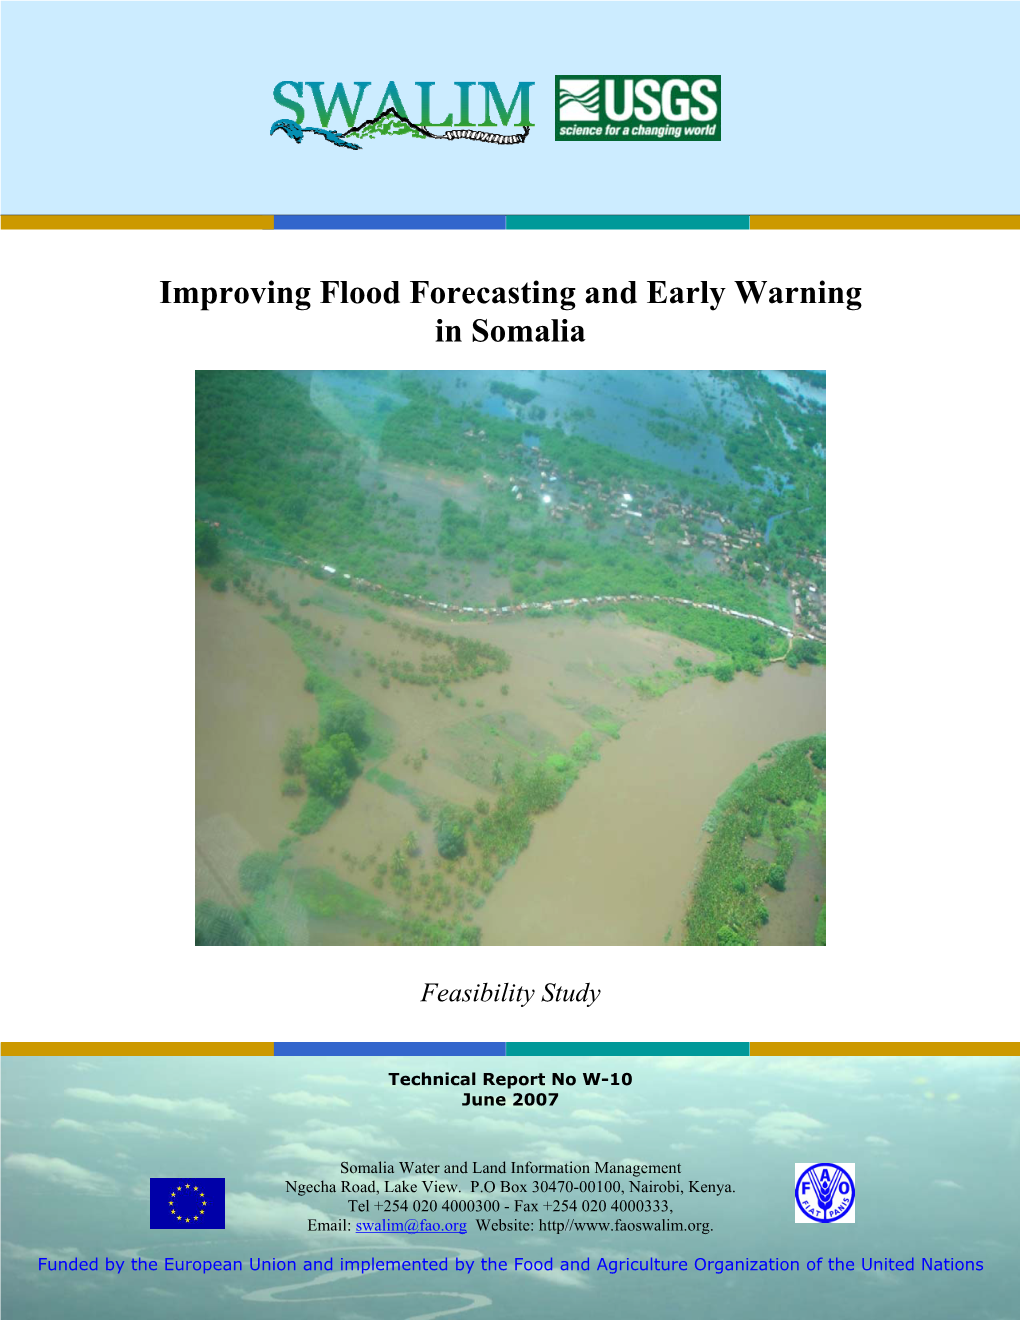 Improving Flood Forecasting and Early Warning in Somalia